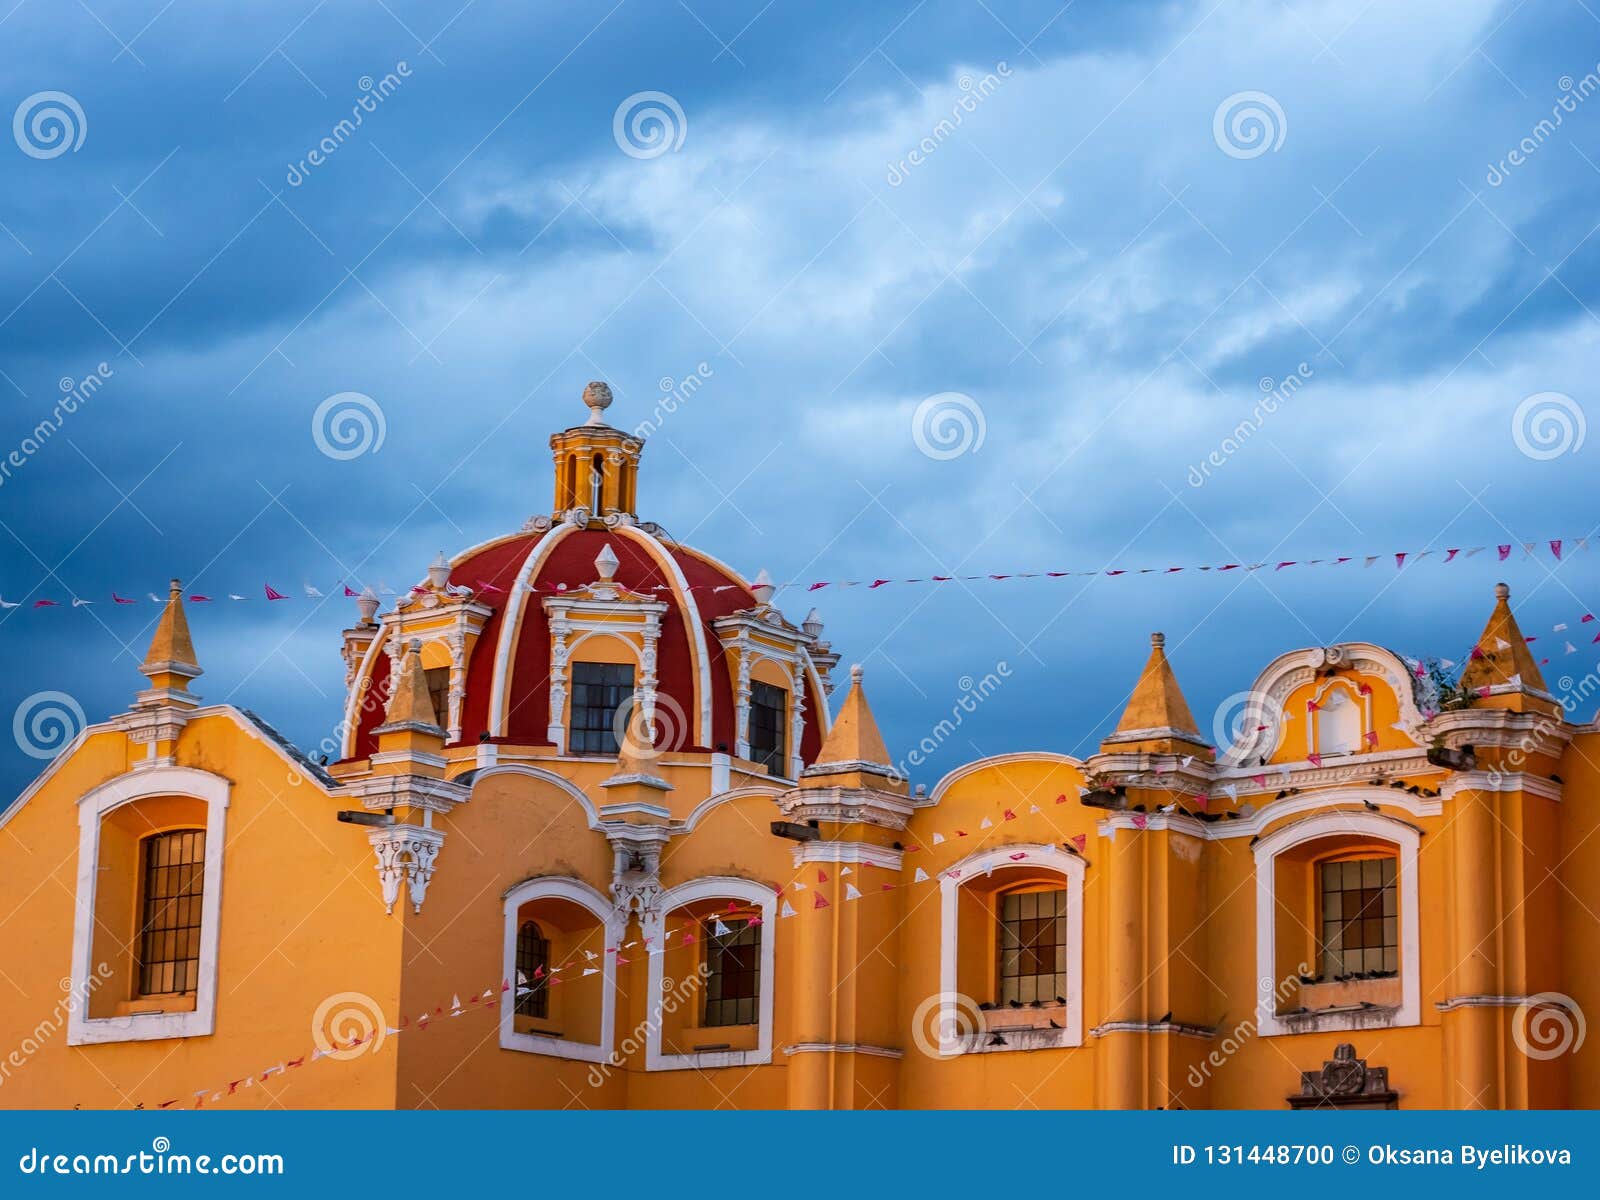 church of san pedro apostol in cholula, puebla, mexico